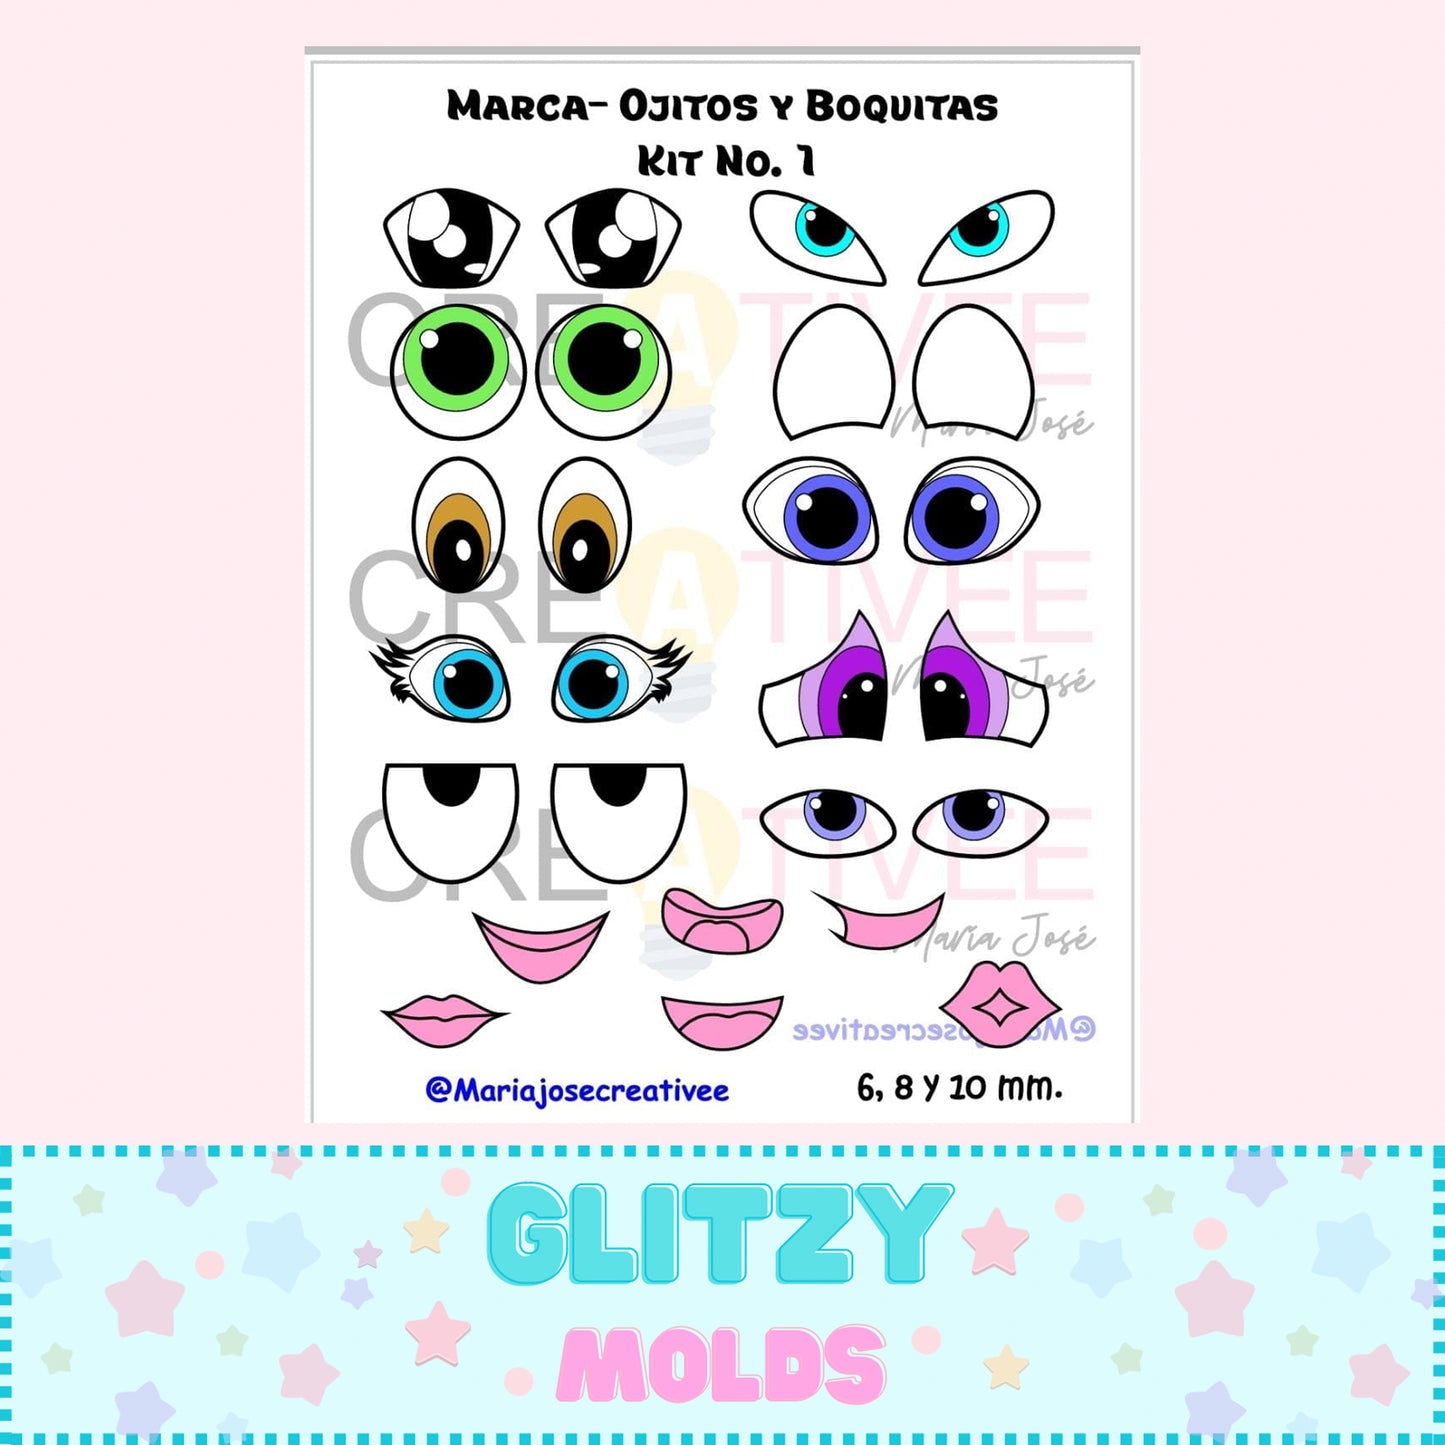 Acrylic Eye Stamps Kit 1, Marca Ojitos Kit 1